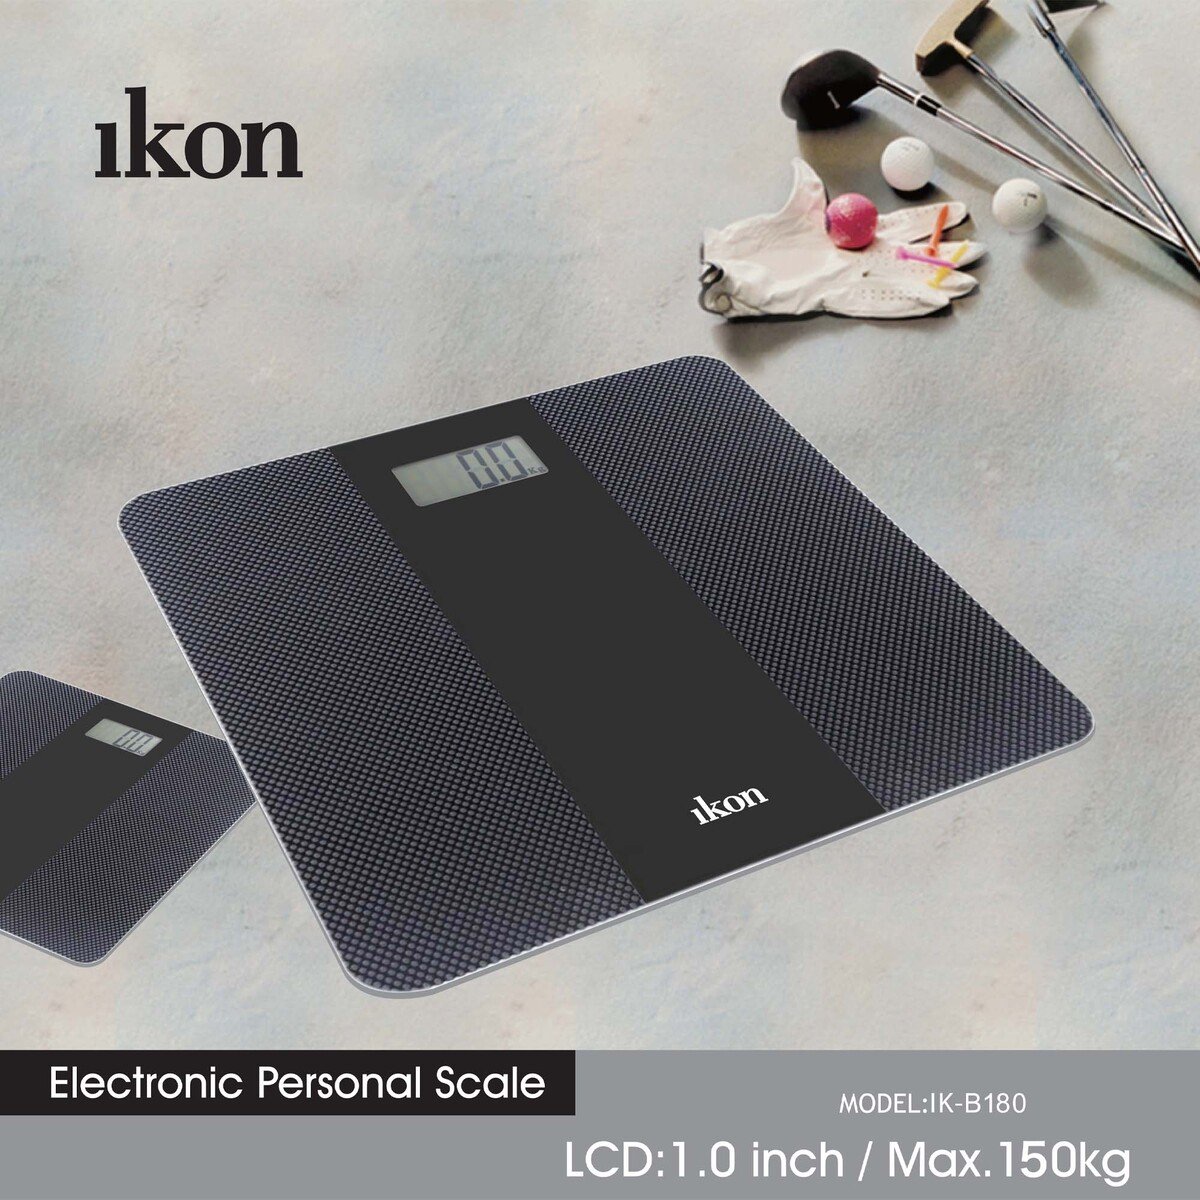 Ikon Digital Bathroom Scale 150kg, IKB180